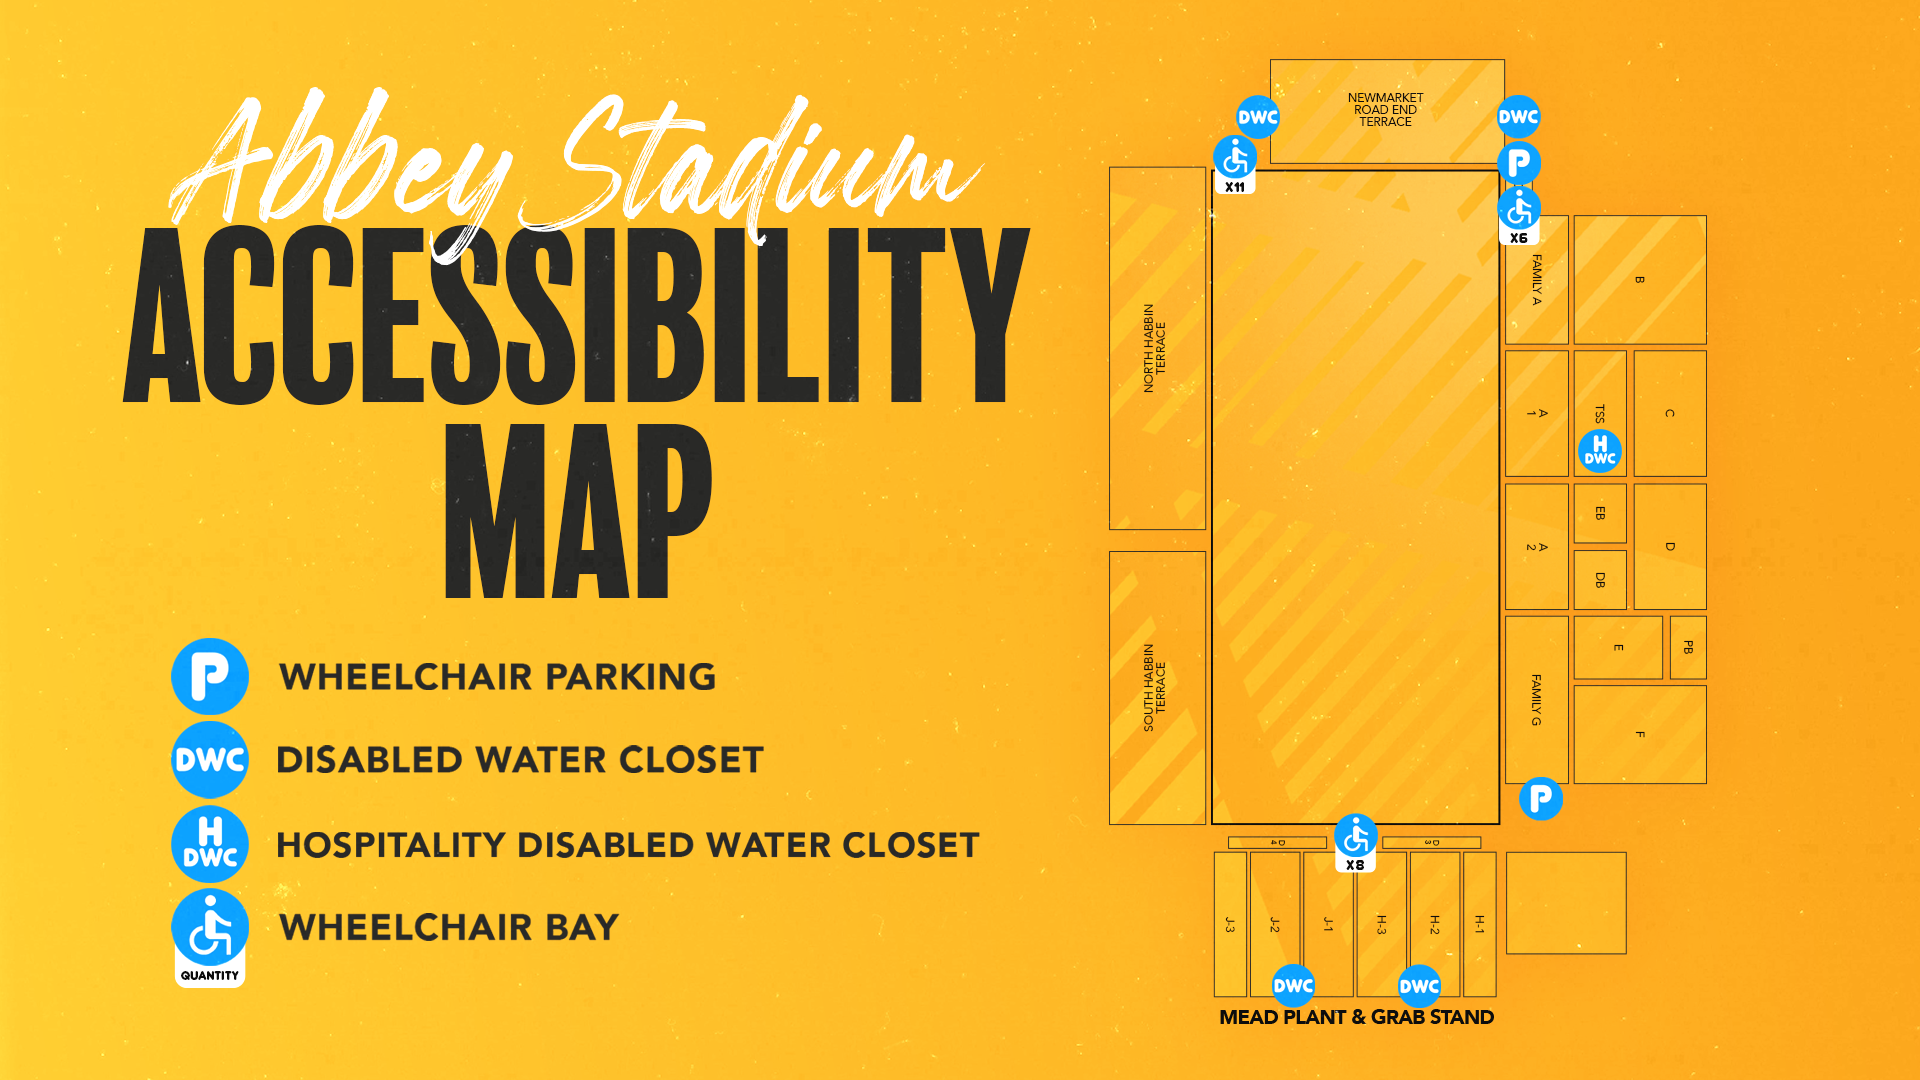 Cledara Abbey Stadium Accessibility Map